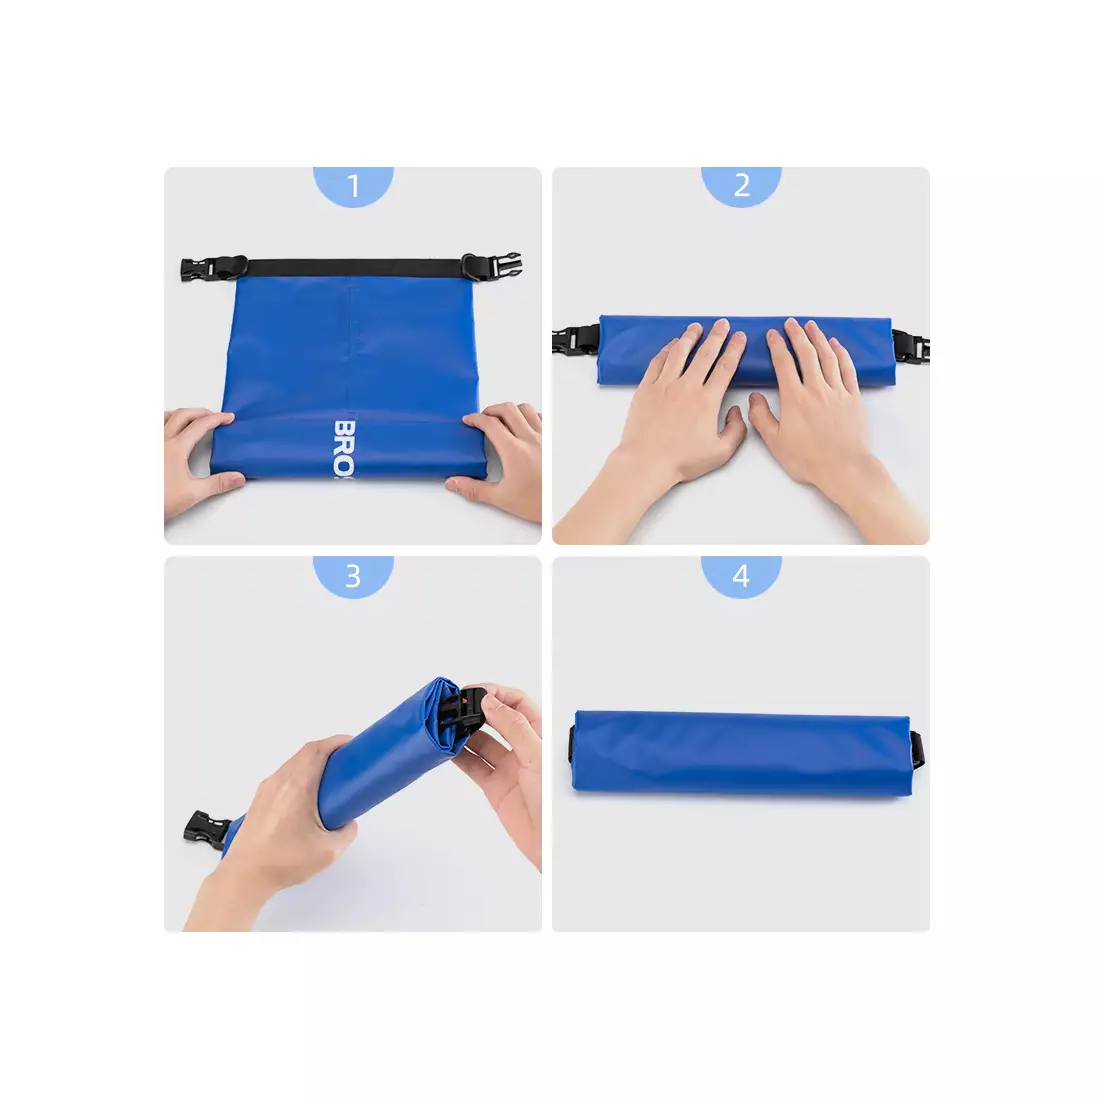 Rockbros vodeodolný batoh / vrece 10L, modrý ST-004BL